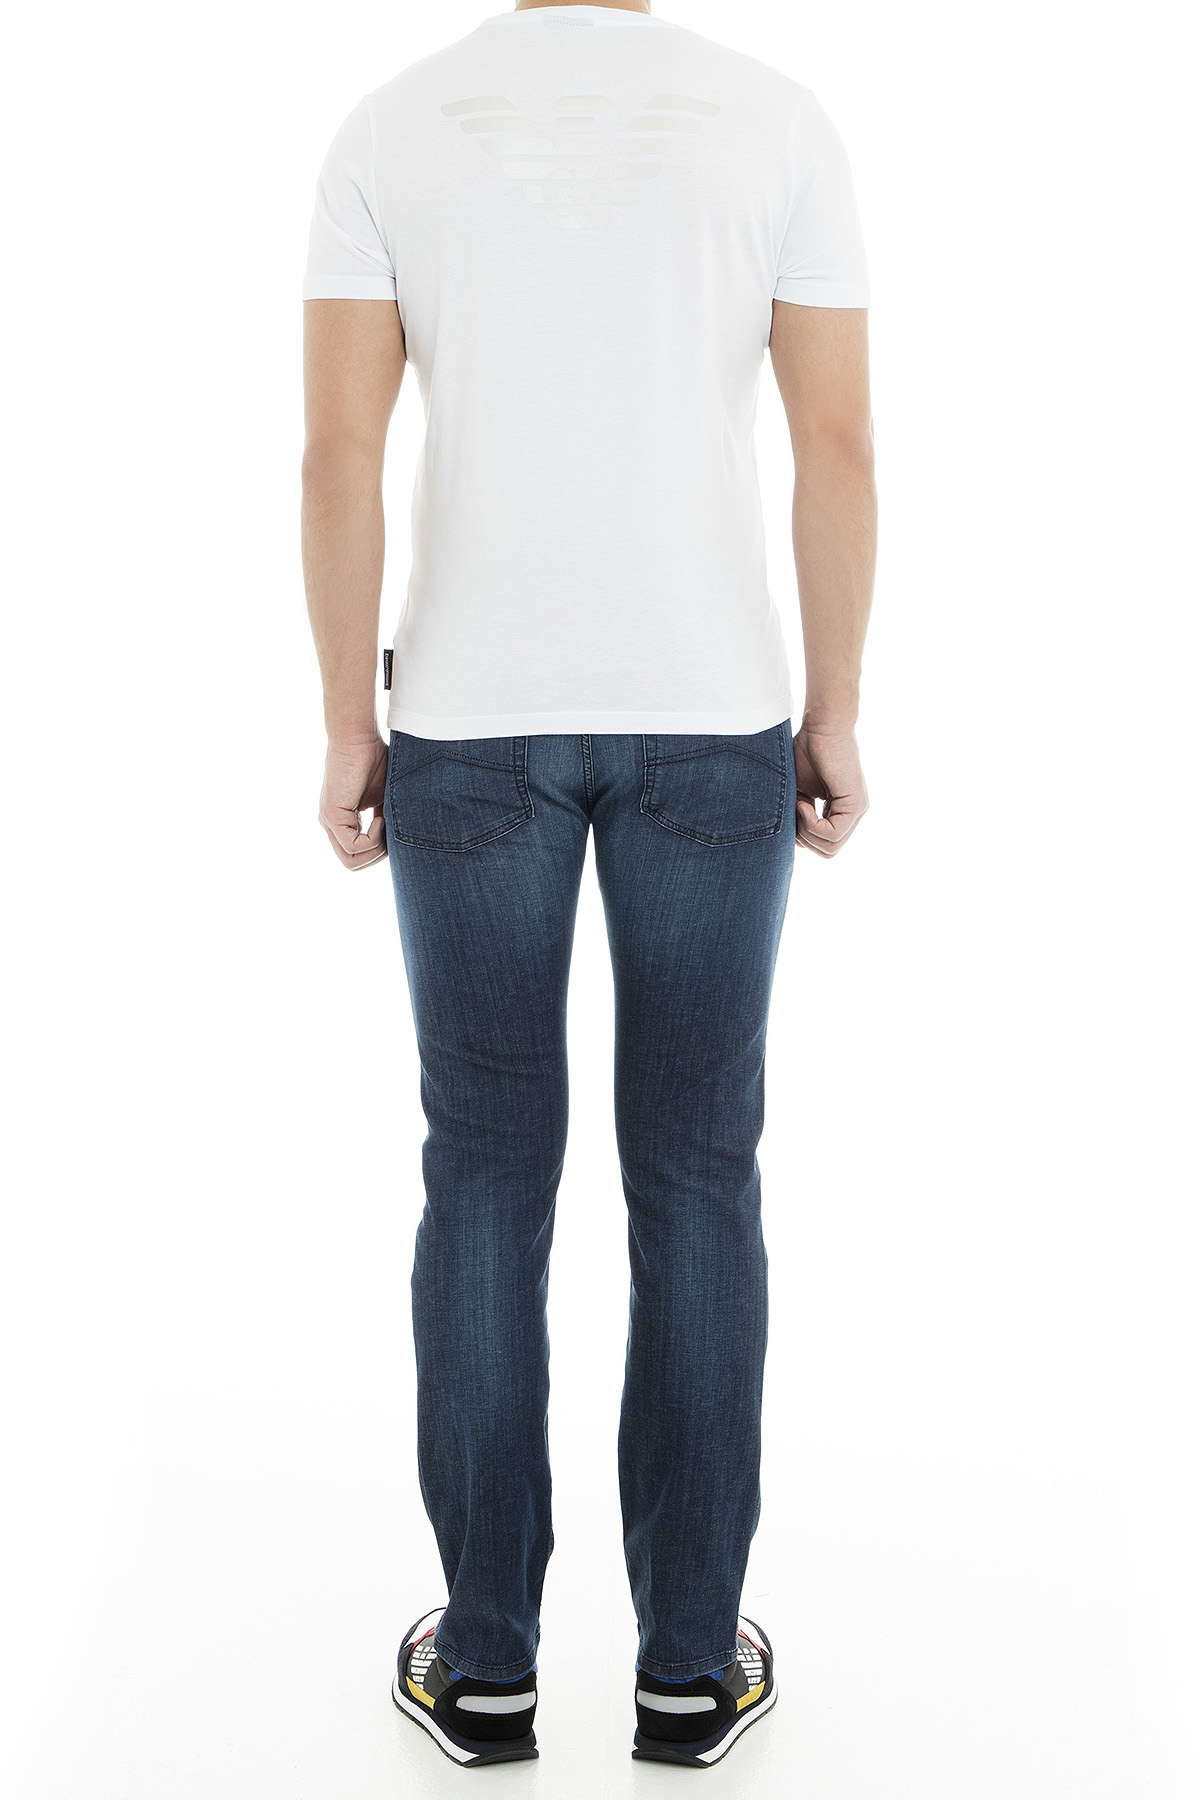 Emporio Armani J45 Jeans Erkek Kot Pantolon 3G1J45 1D5PZ 0942 LACİVERT